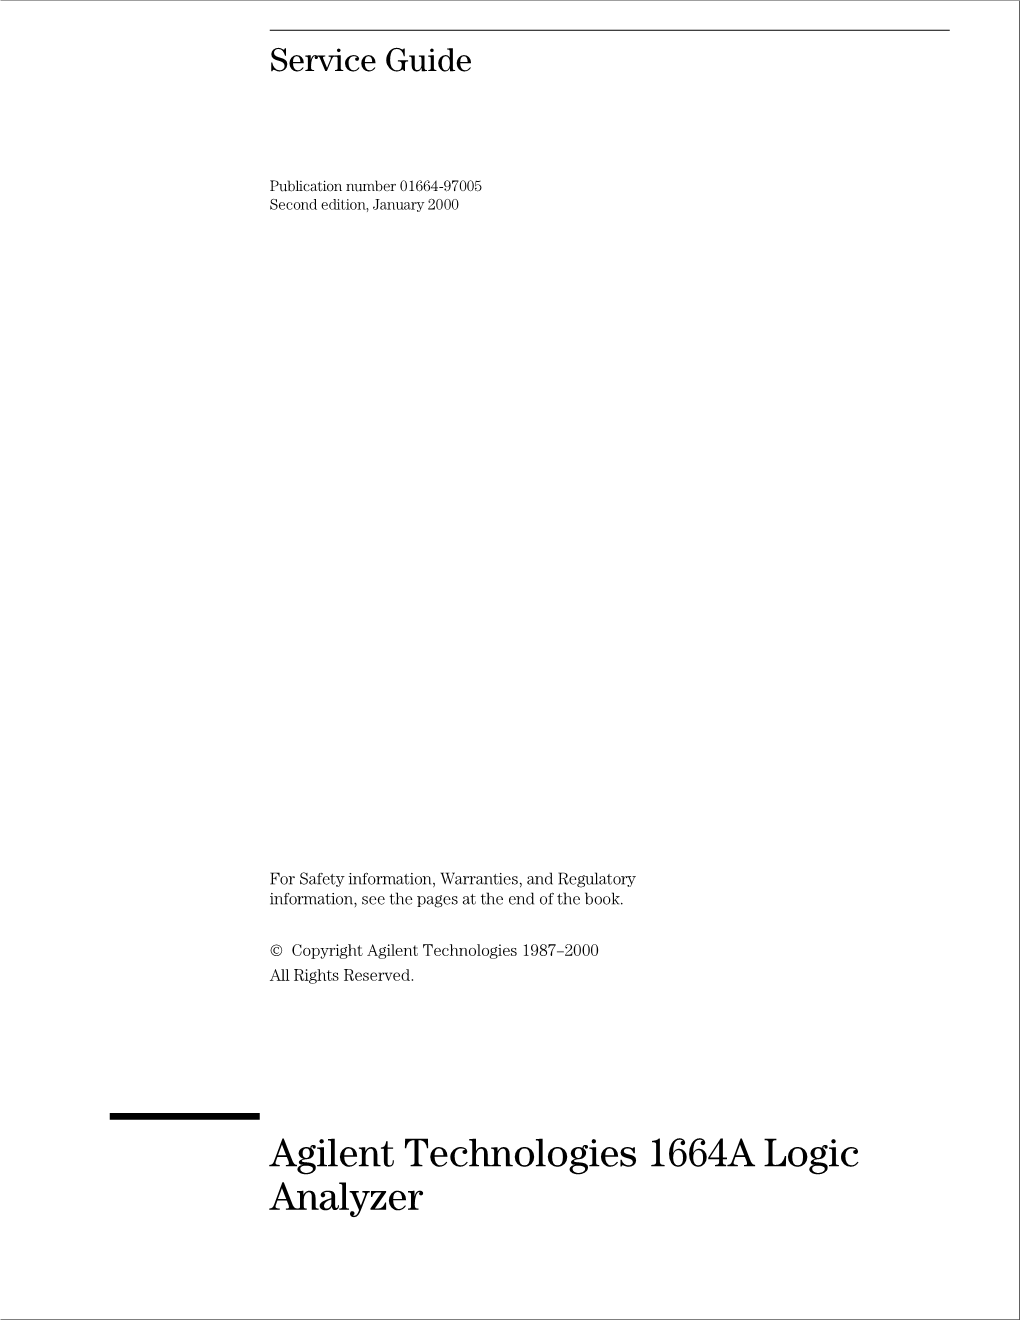 1664A Logic Analyzer Service Guide